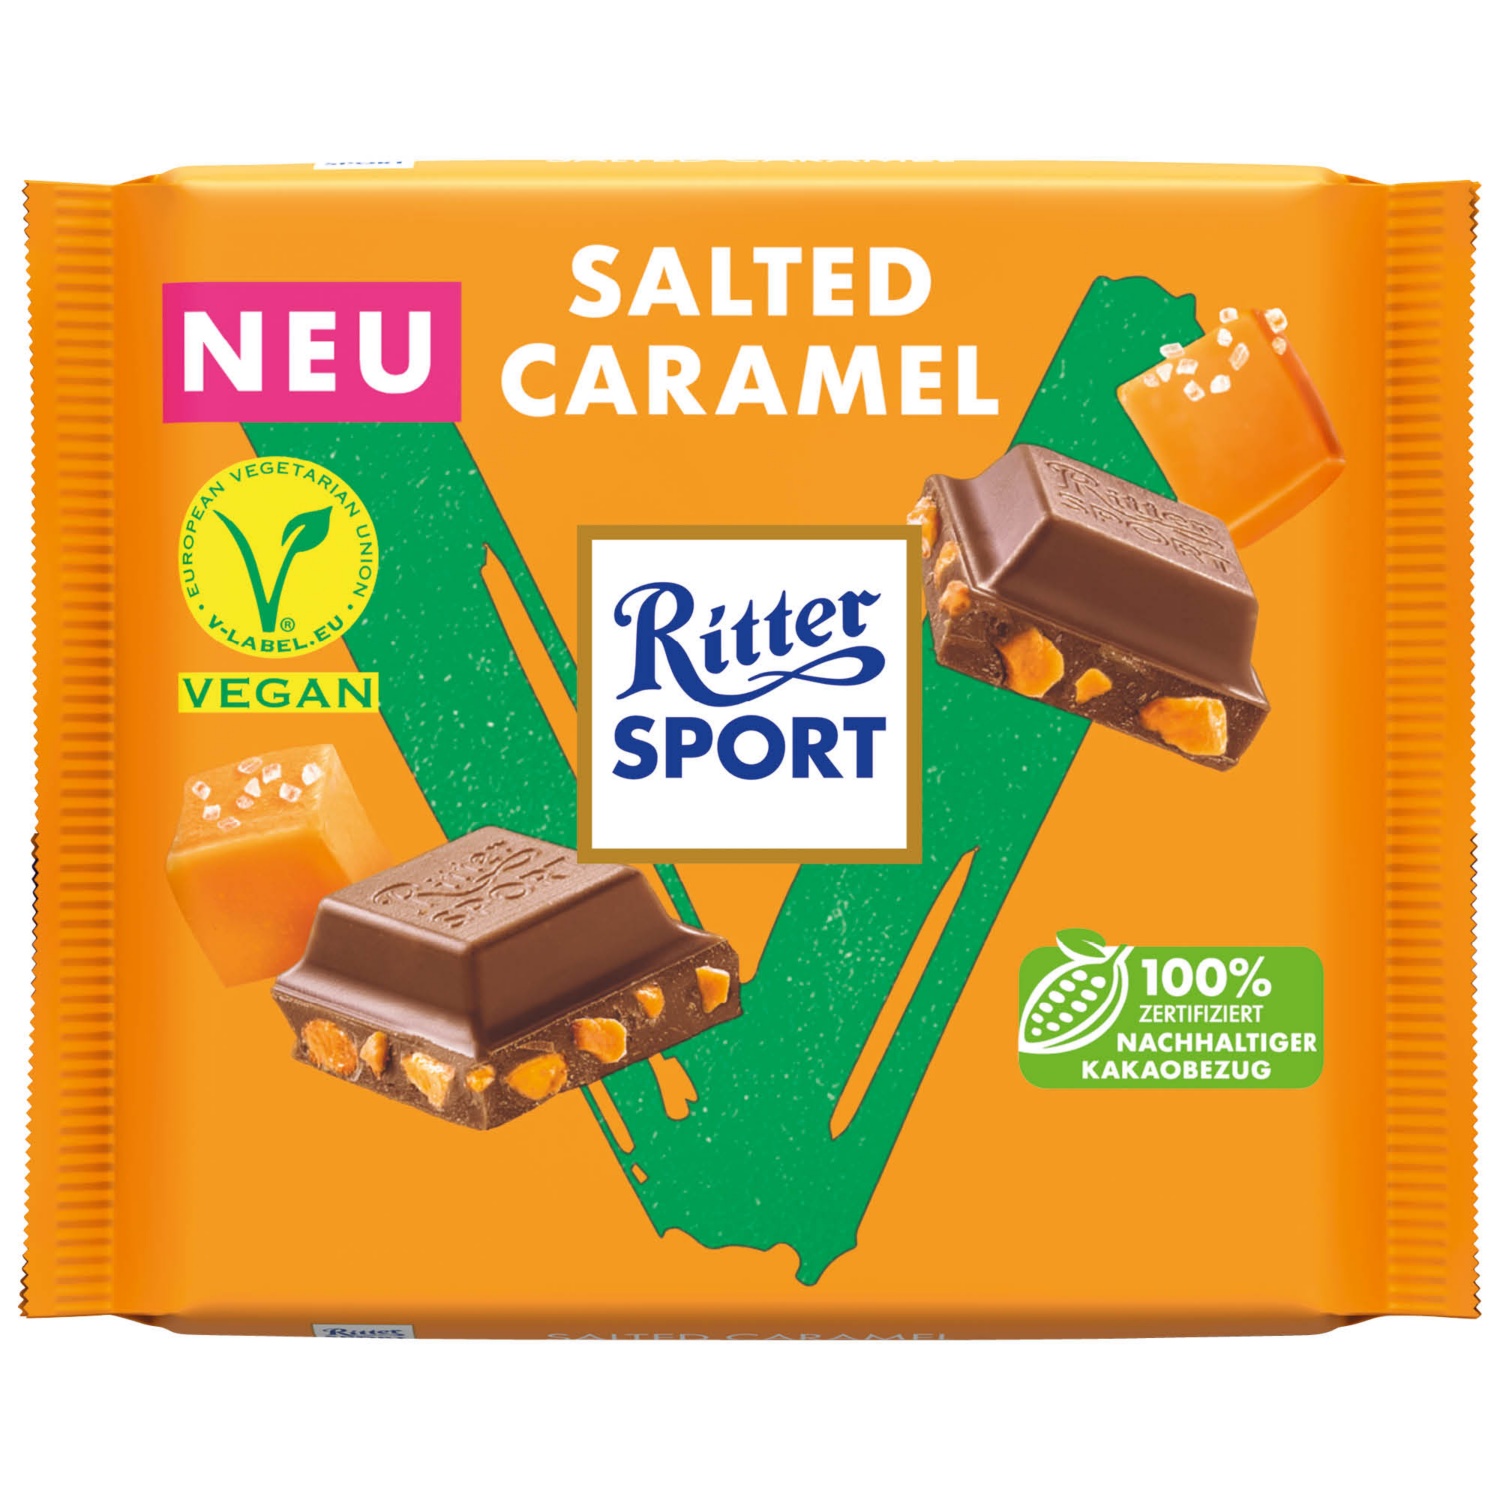 Ritter Sport Vegan, Salted Caramel